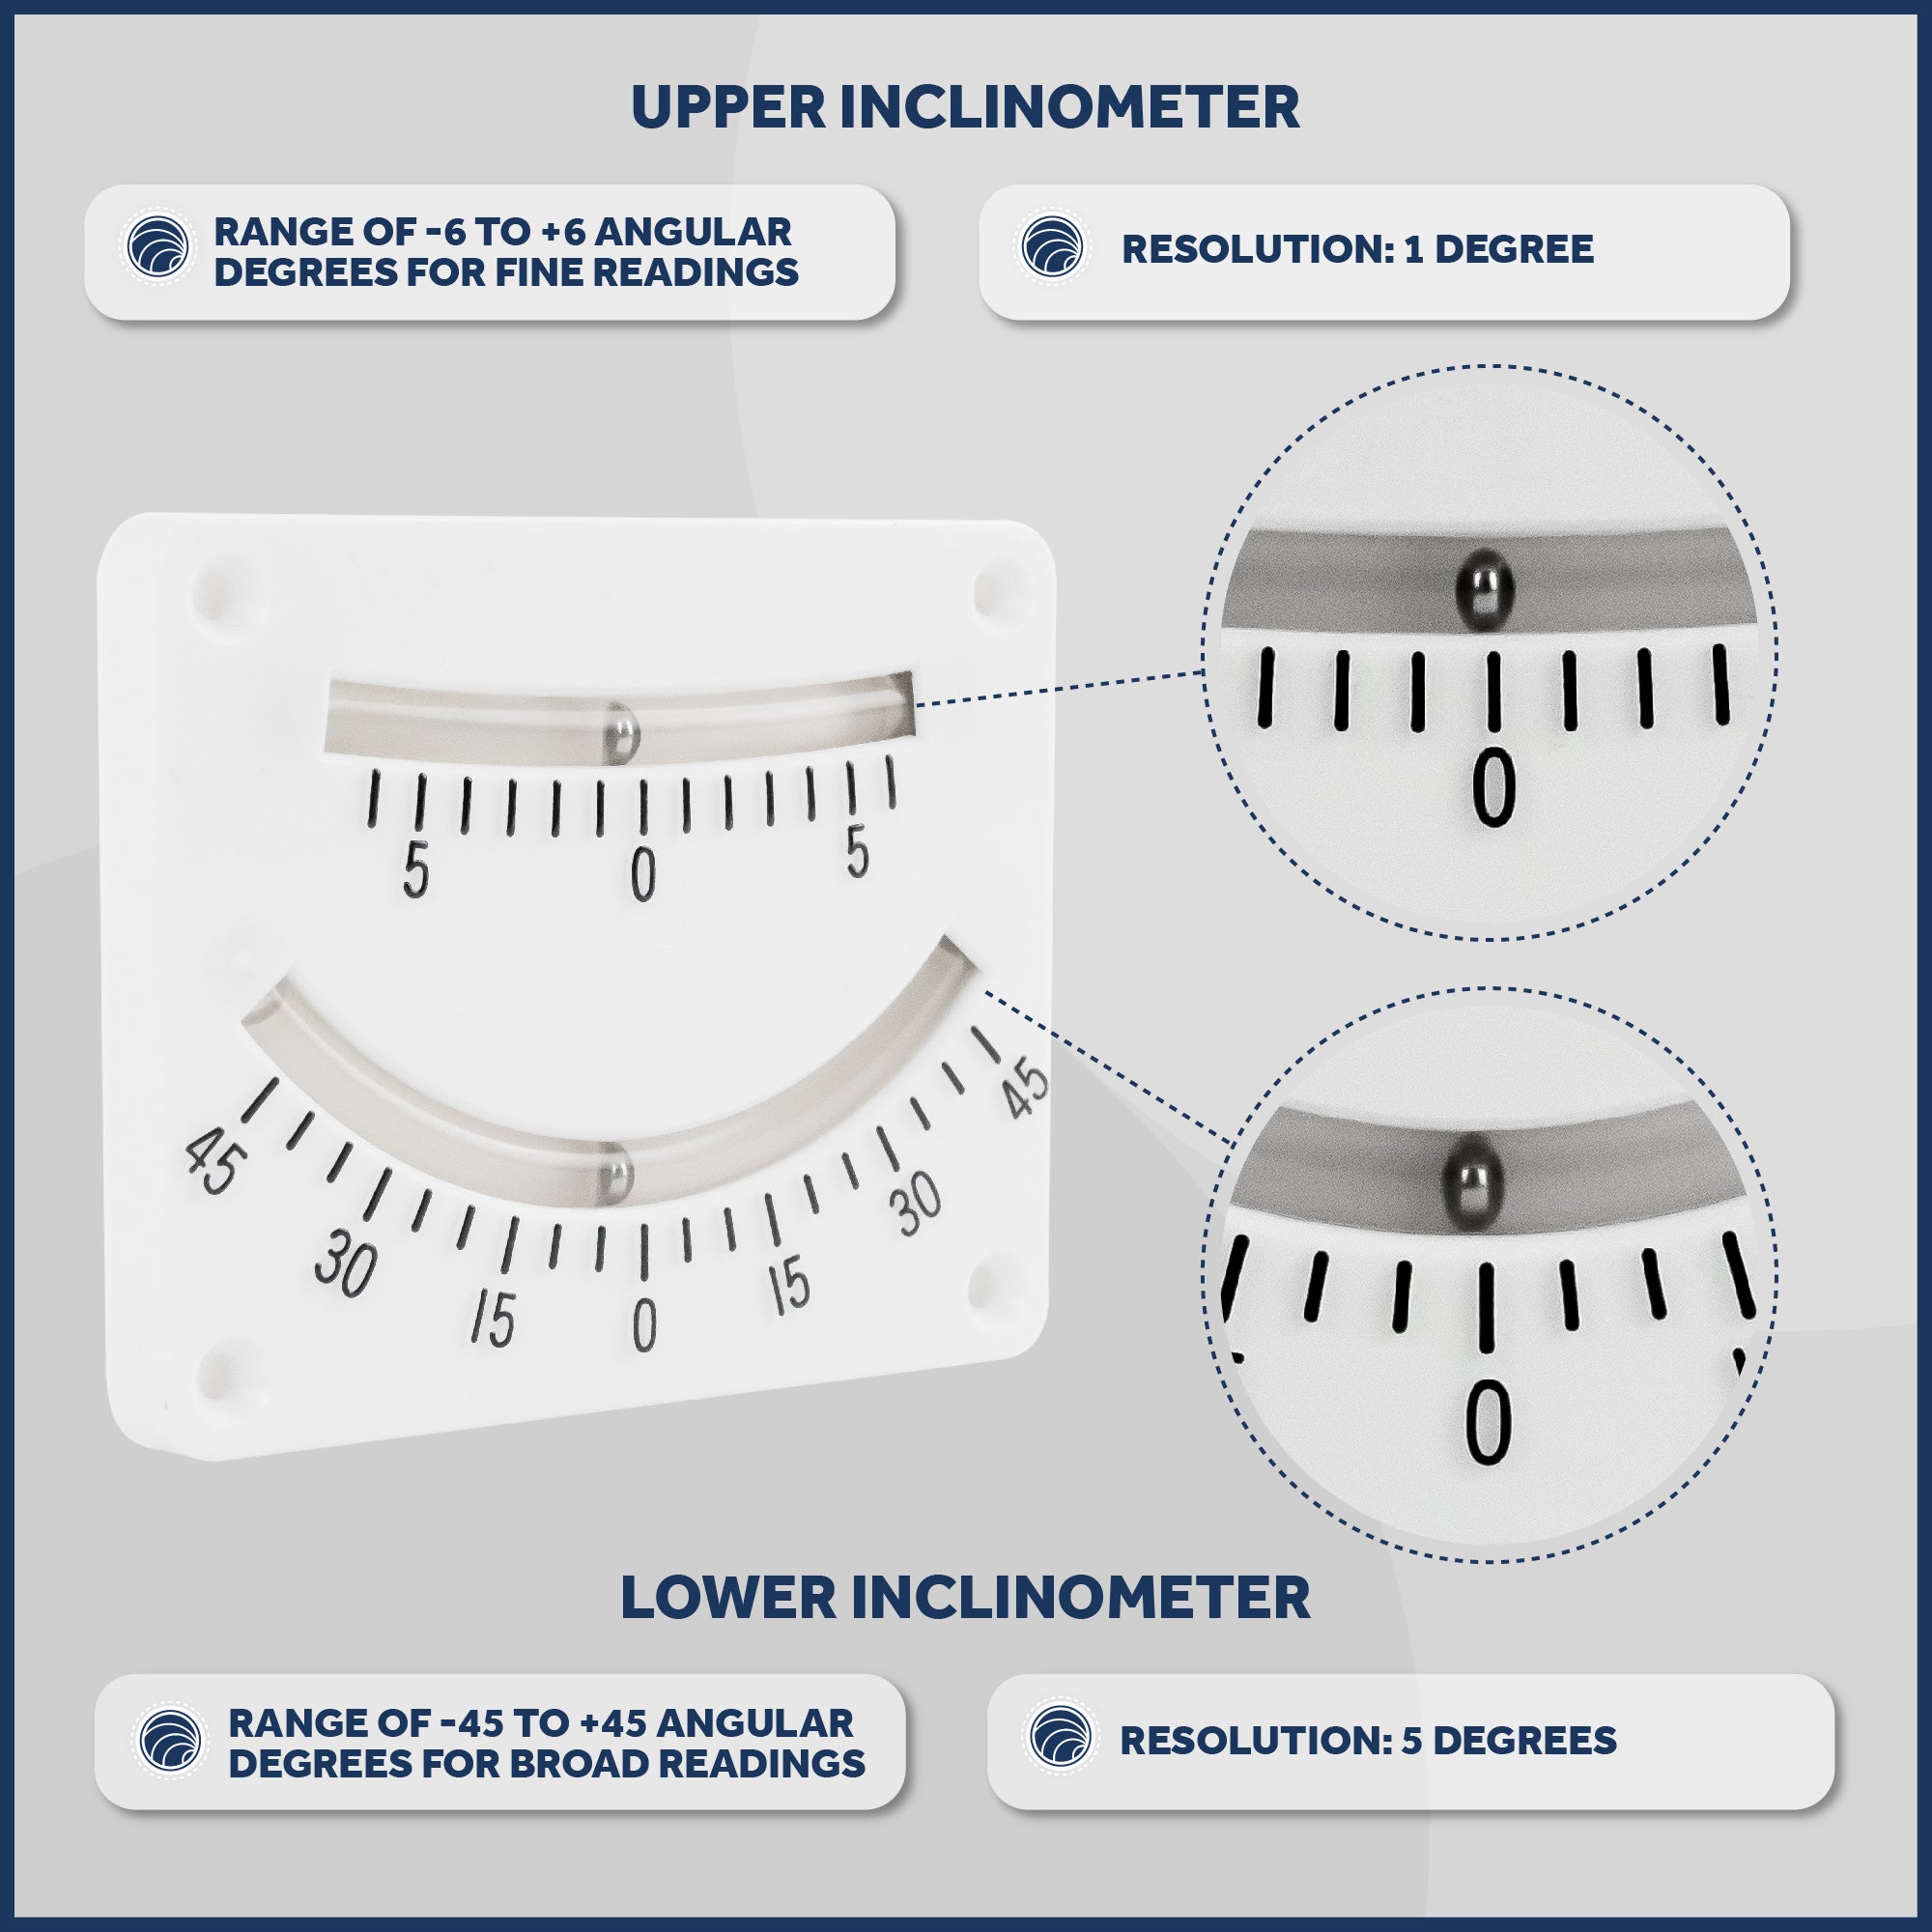 Dual Inclinometer - FO3037